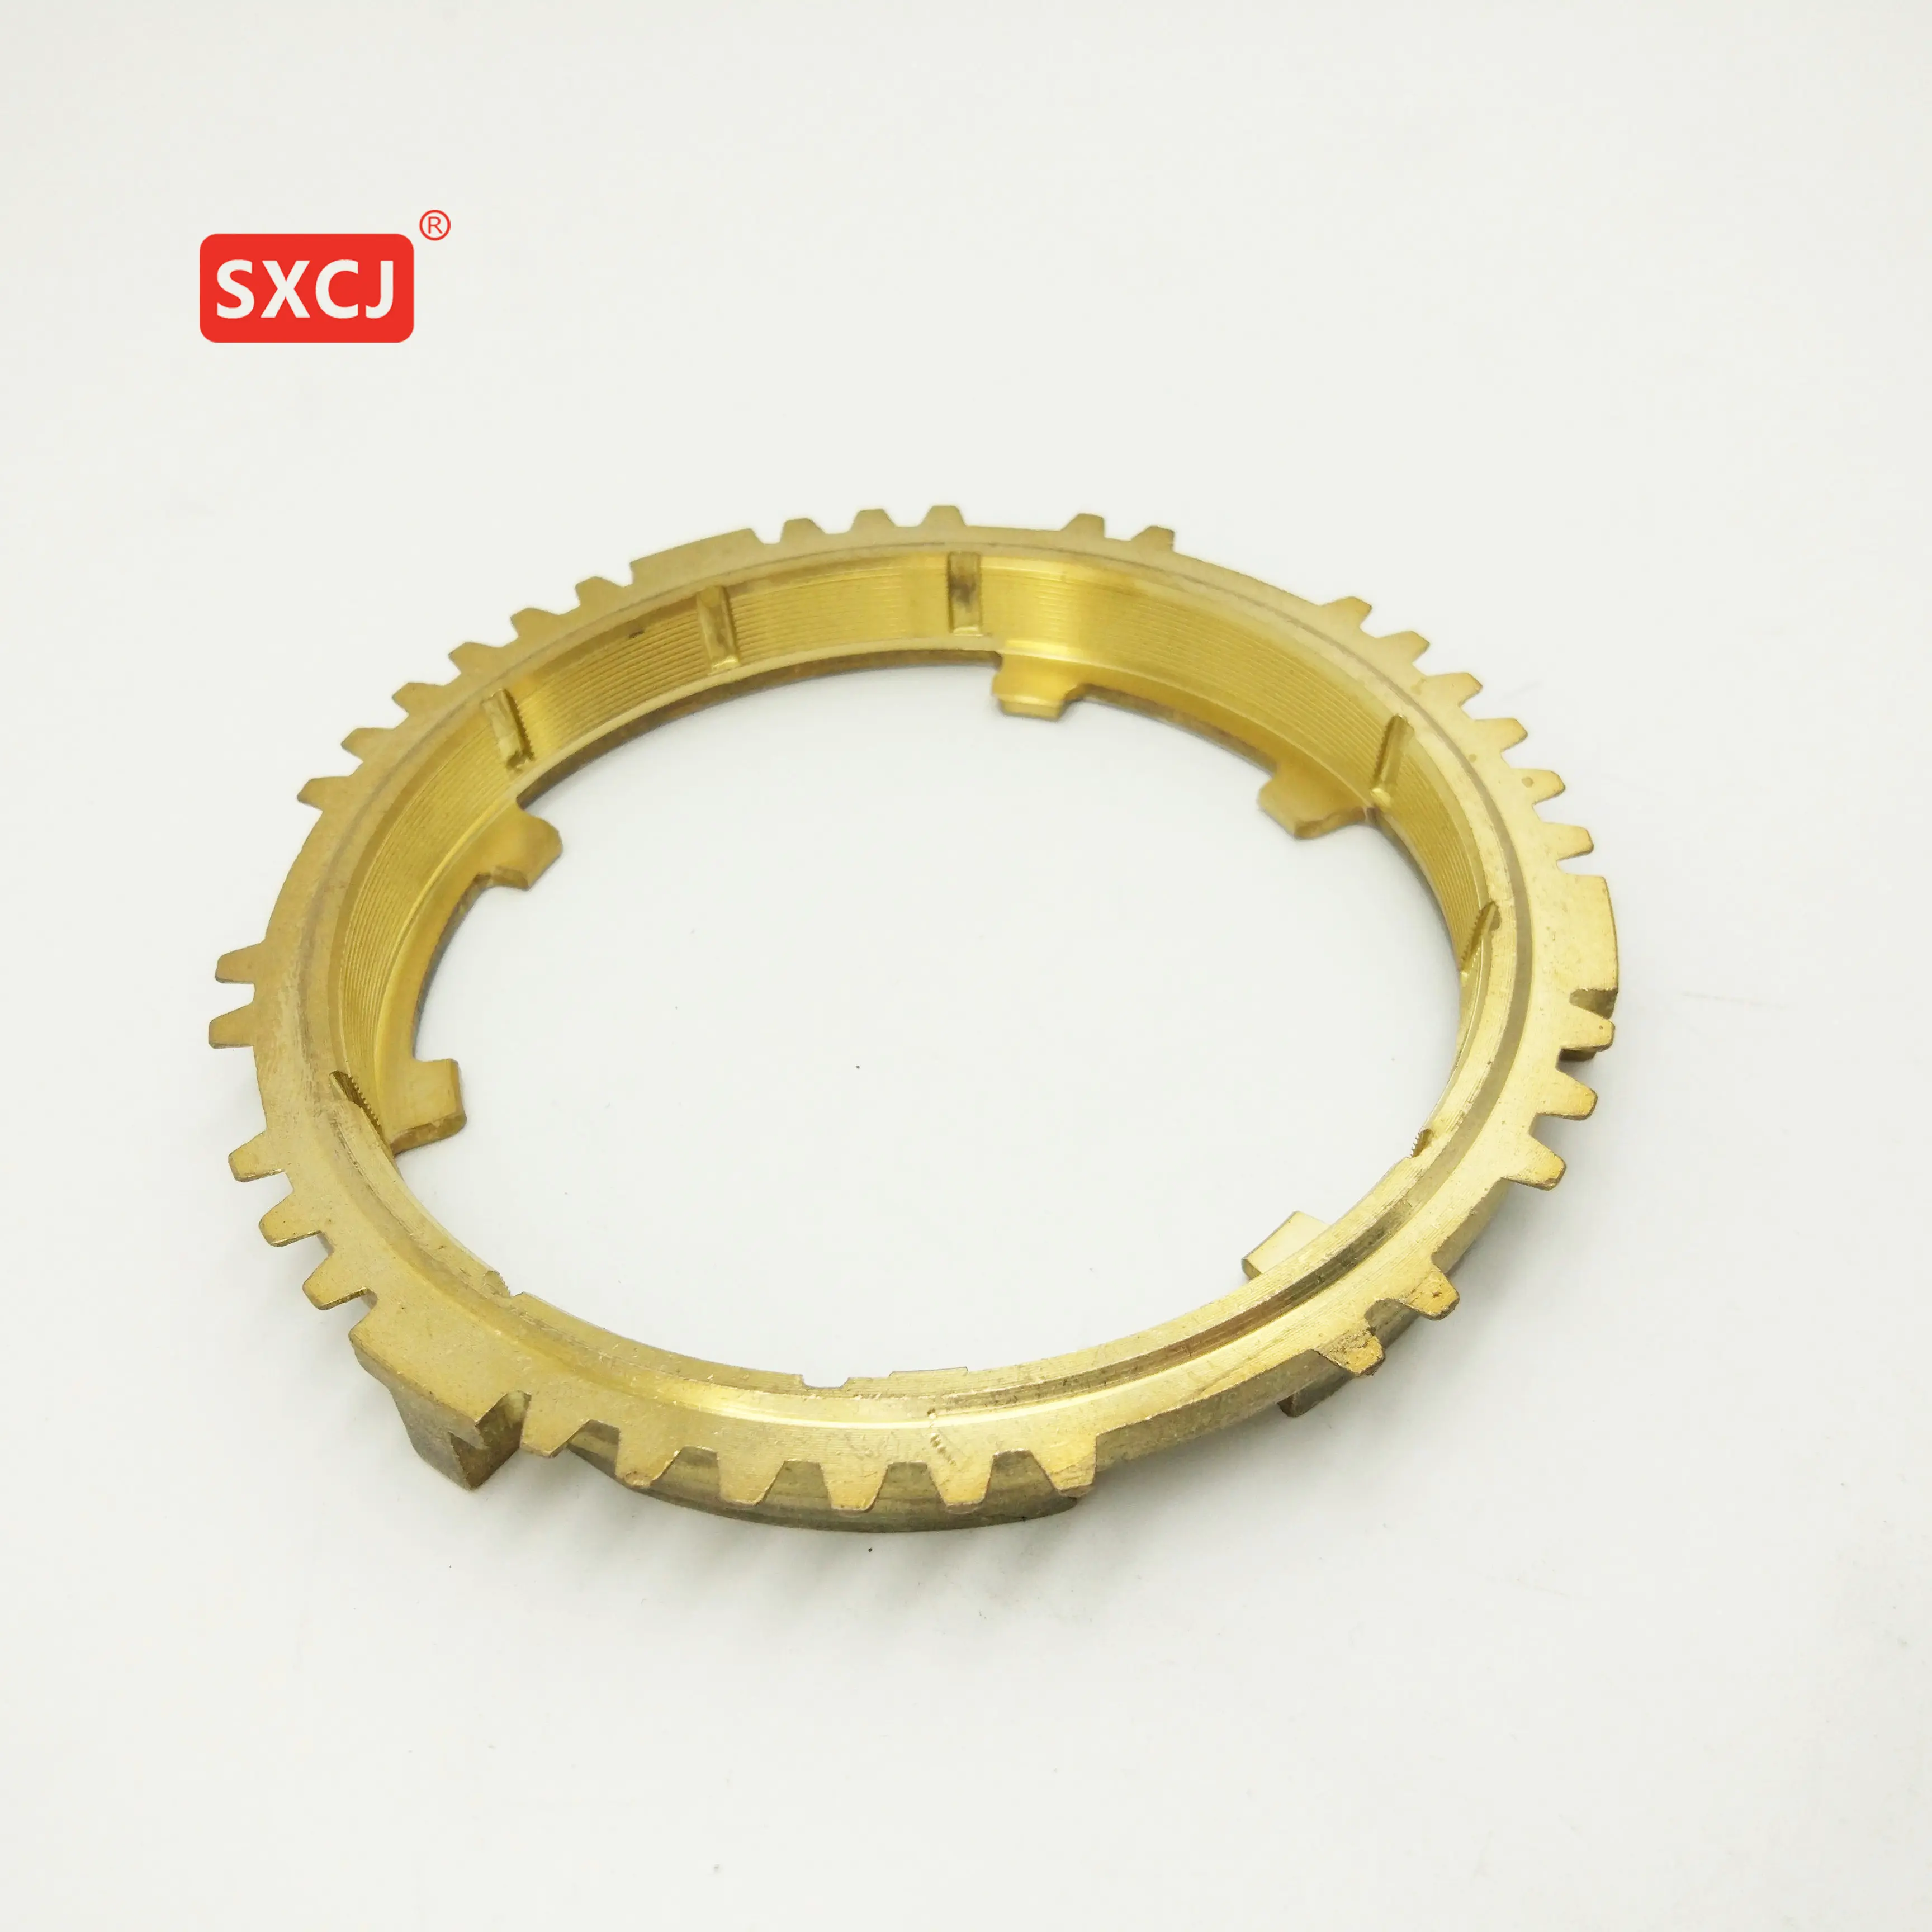 Automotive parts transfer case parts standard transmission parts Synchronizer brass gear ring